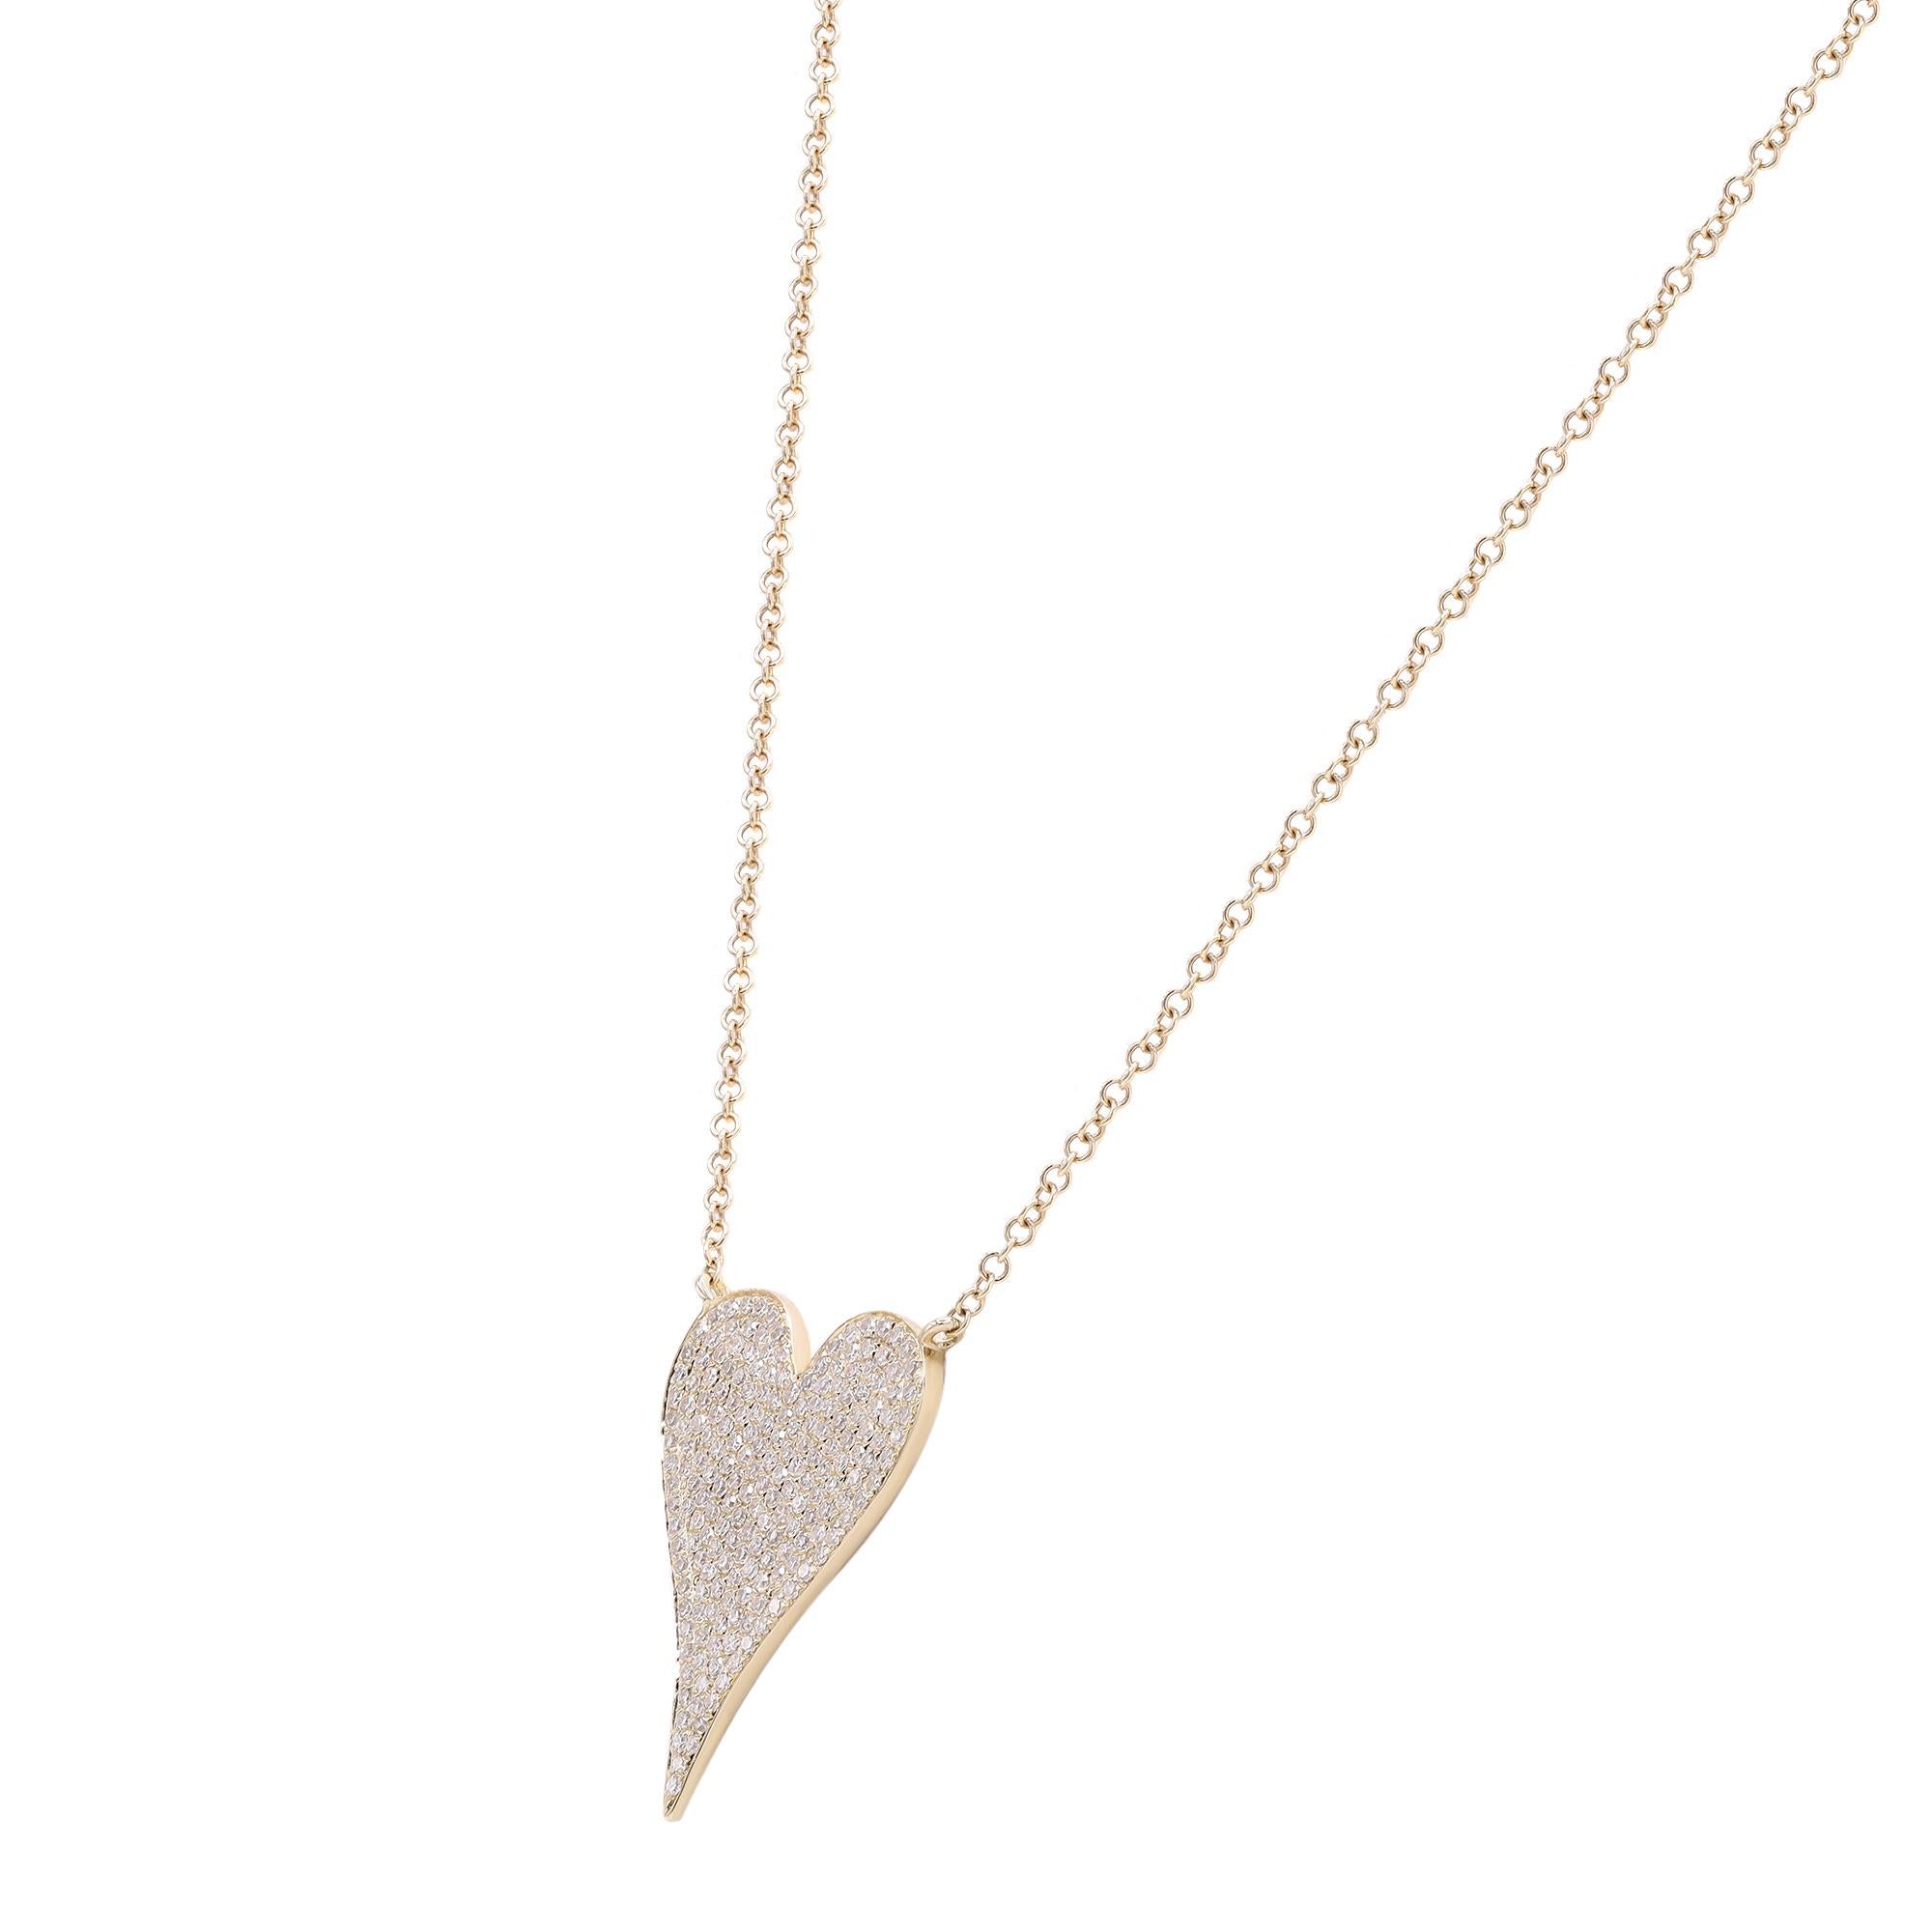 Modern Rachel Koen Pave Diamond Heart Pendant Necklace 14K Yellow Gold 0.21cttw For Sale